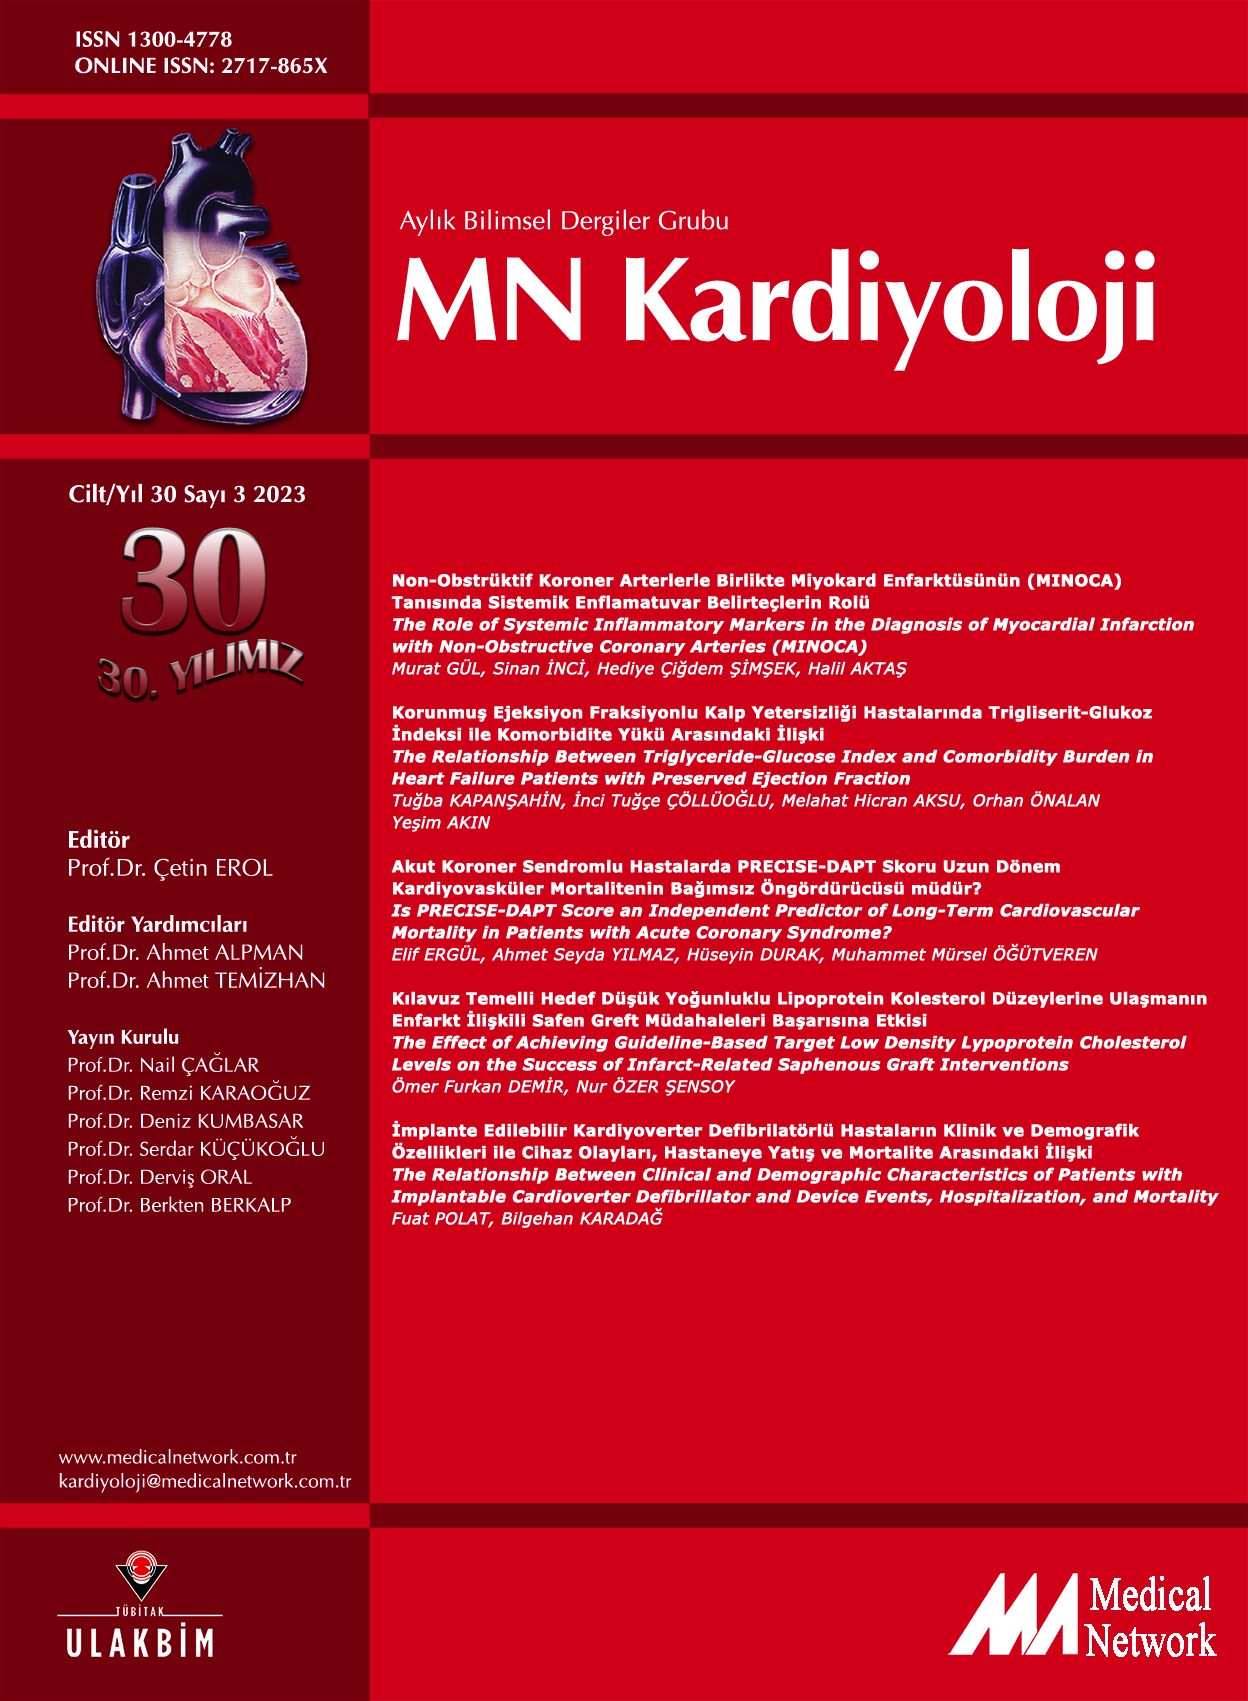 <p>MN Kardiyoloji Cilt: 30 Say: 3 2023 MN Cardiology Volume: 30 No: 3 2023</p>